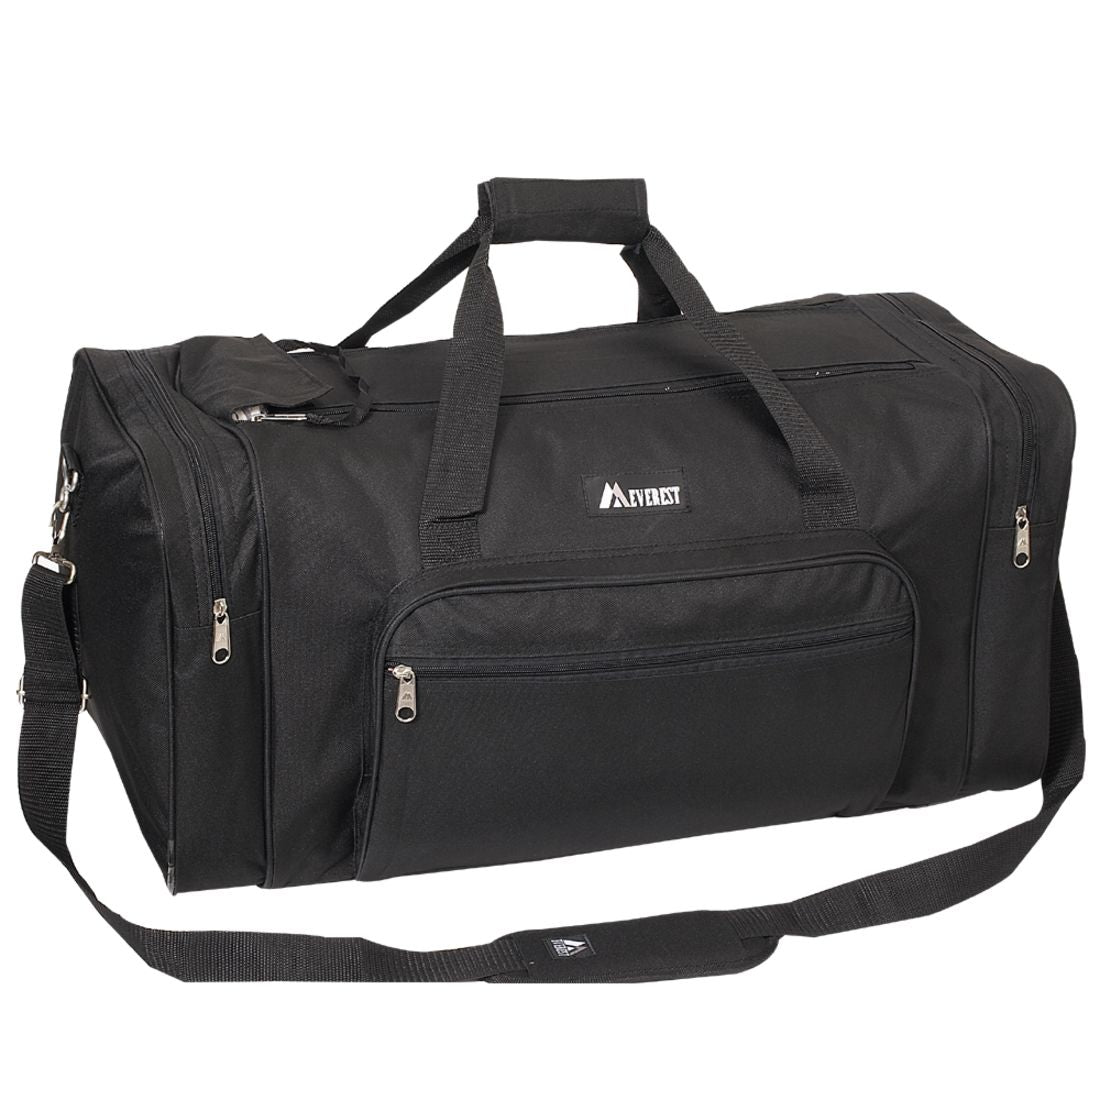 Everest Classic Gear Duffle Medium Size Bag